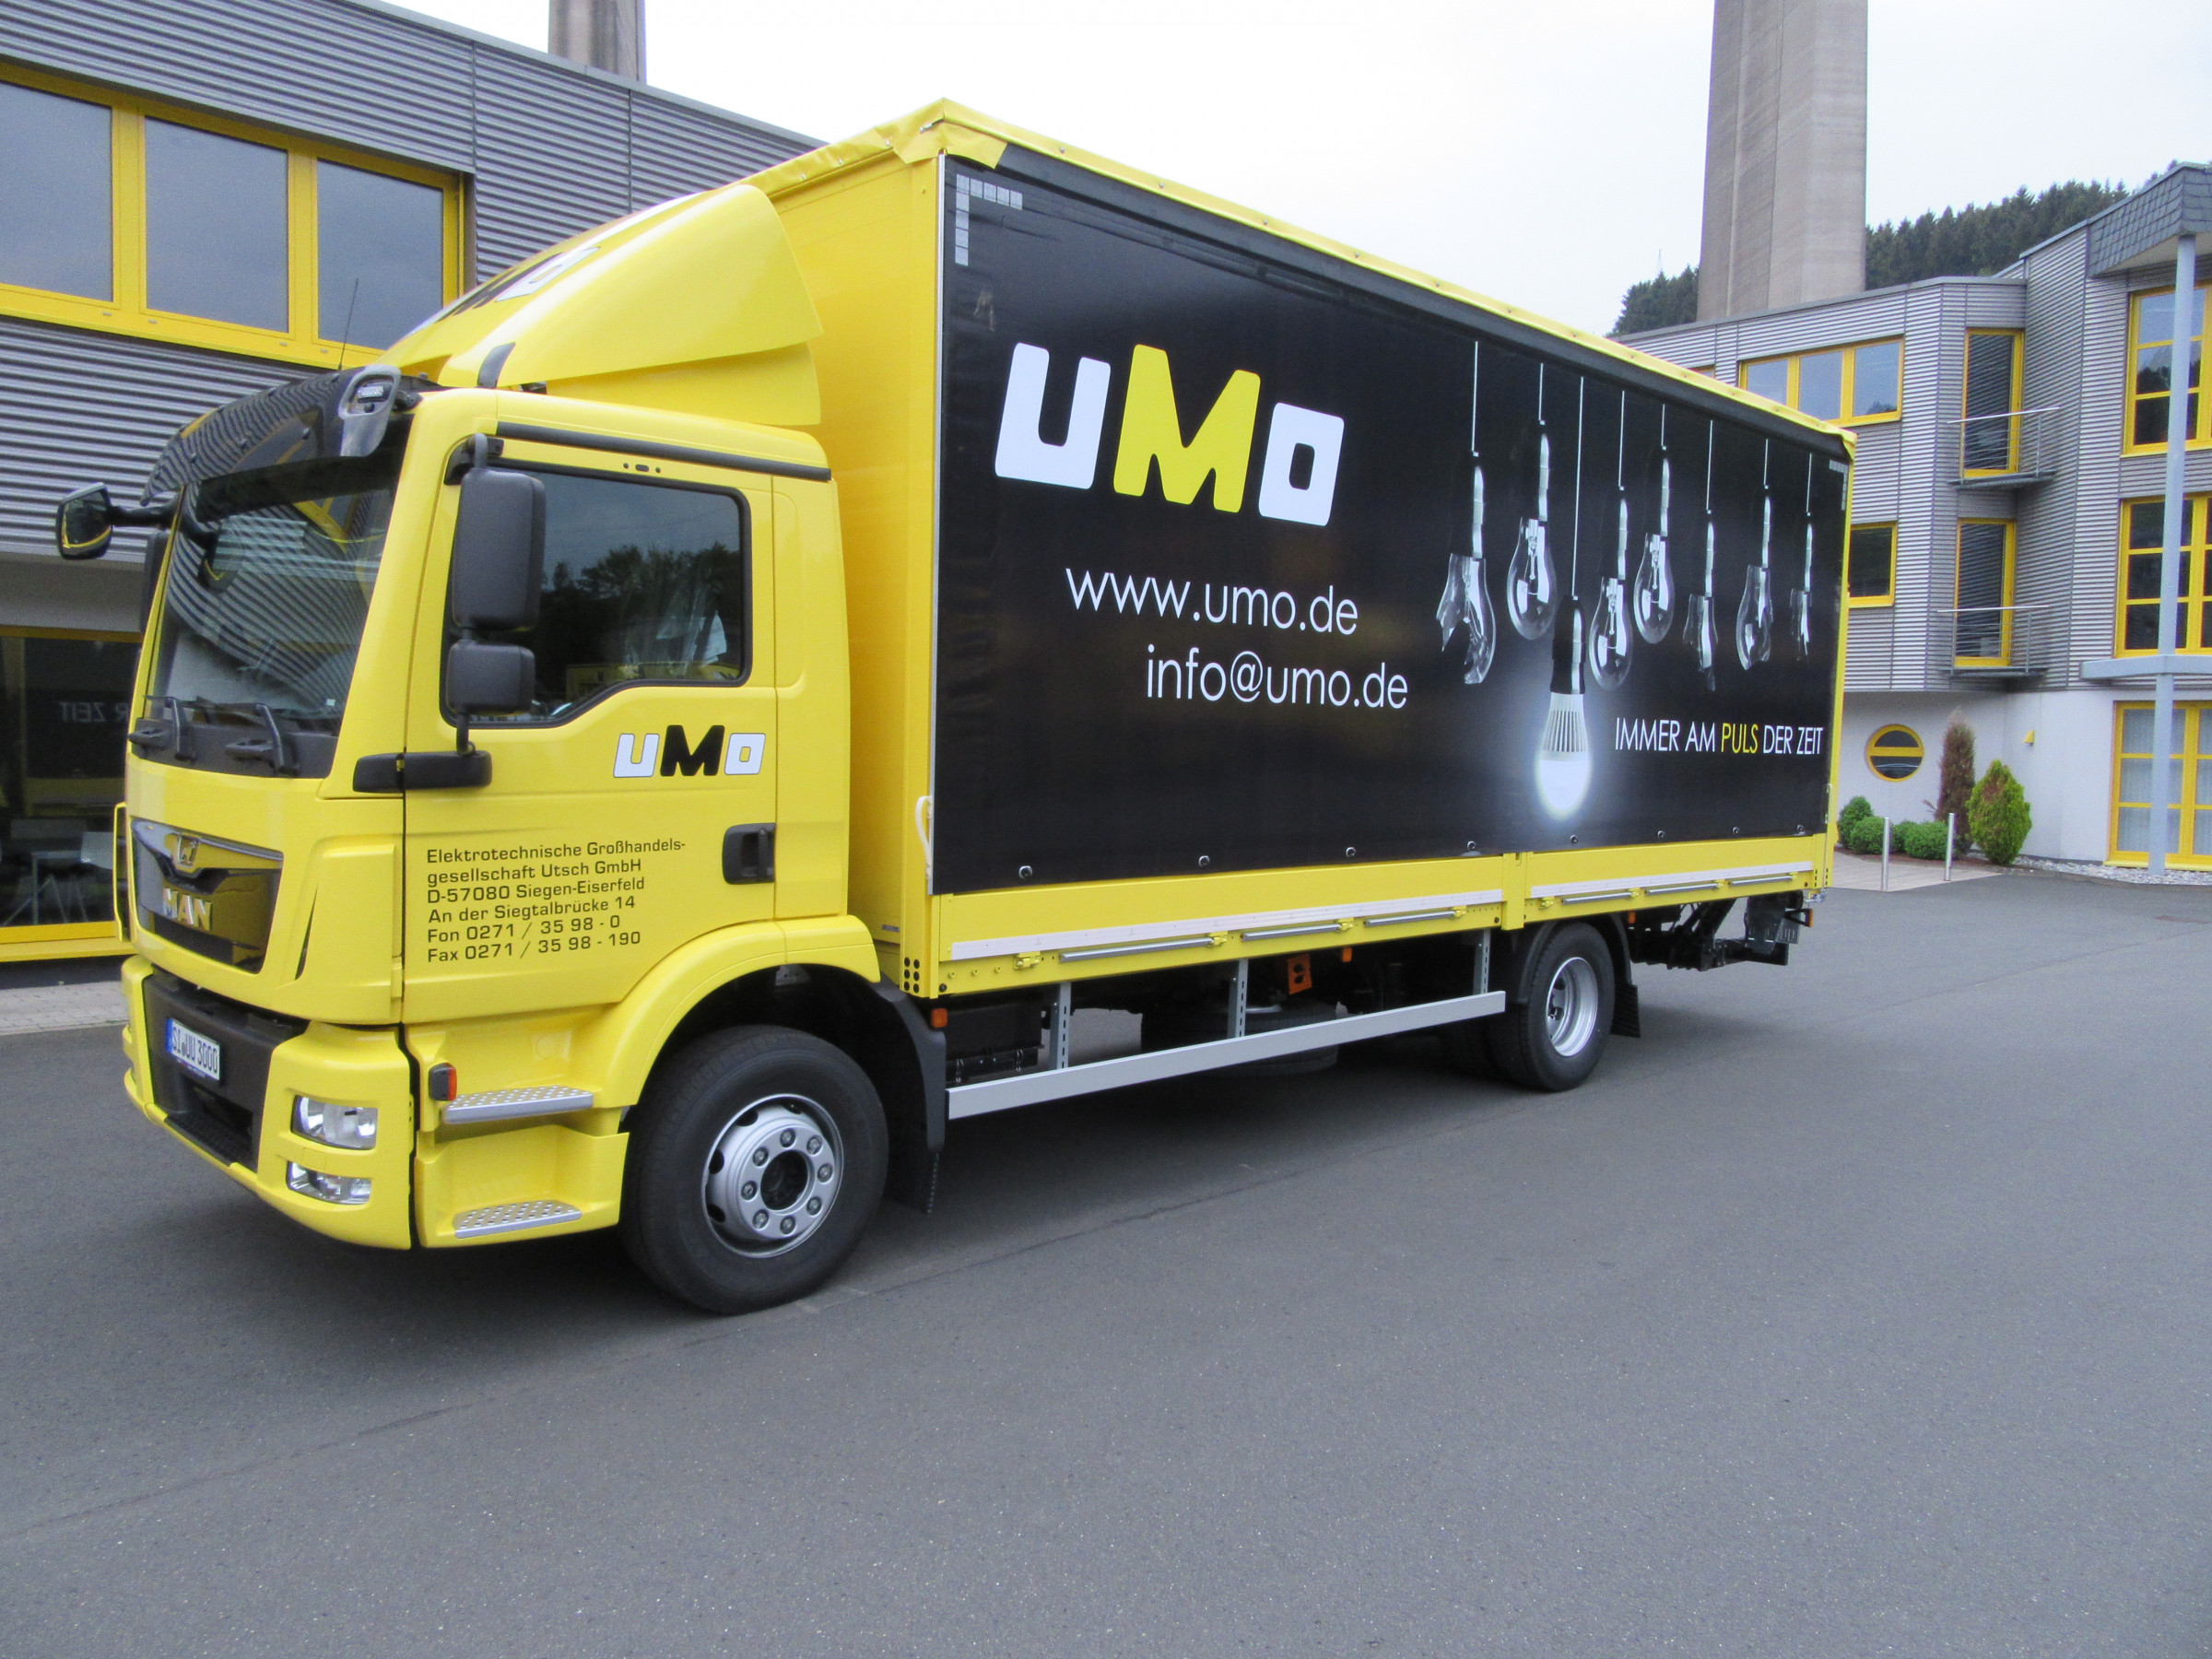 UMO Elektrotechnische Großhandelsgesellschaft Utsch GmbH